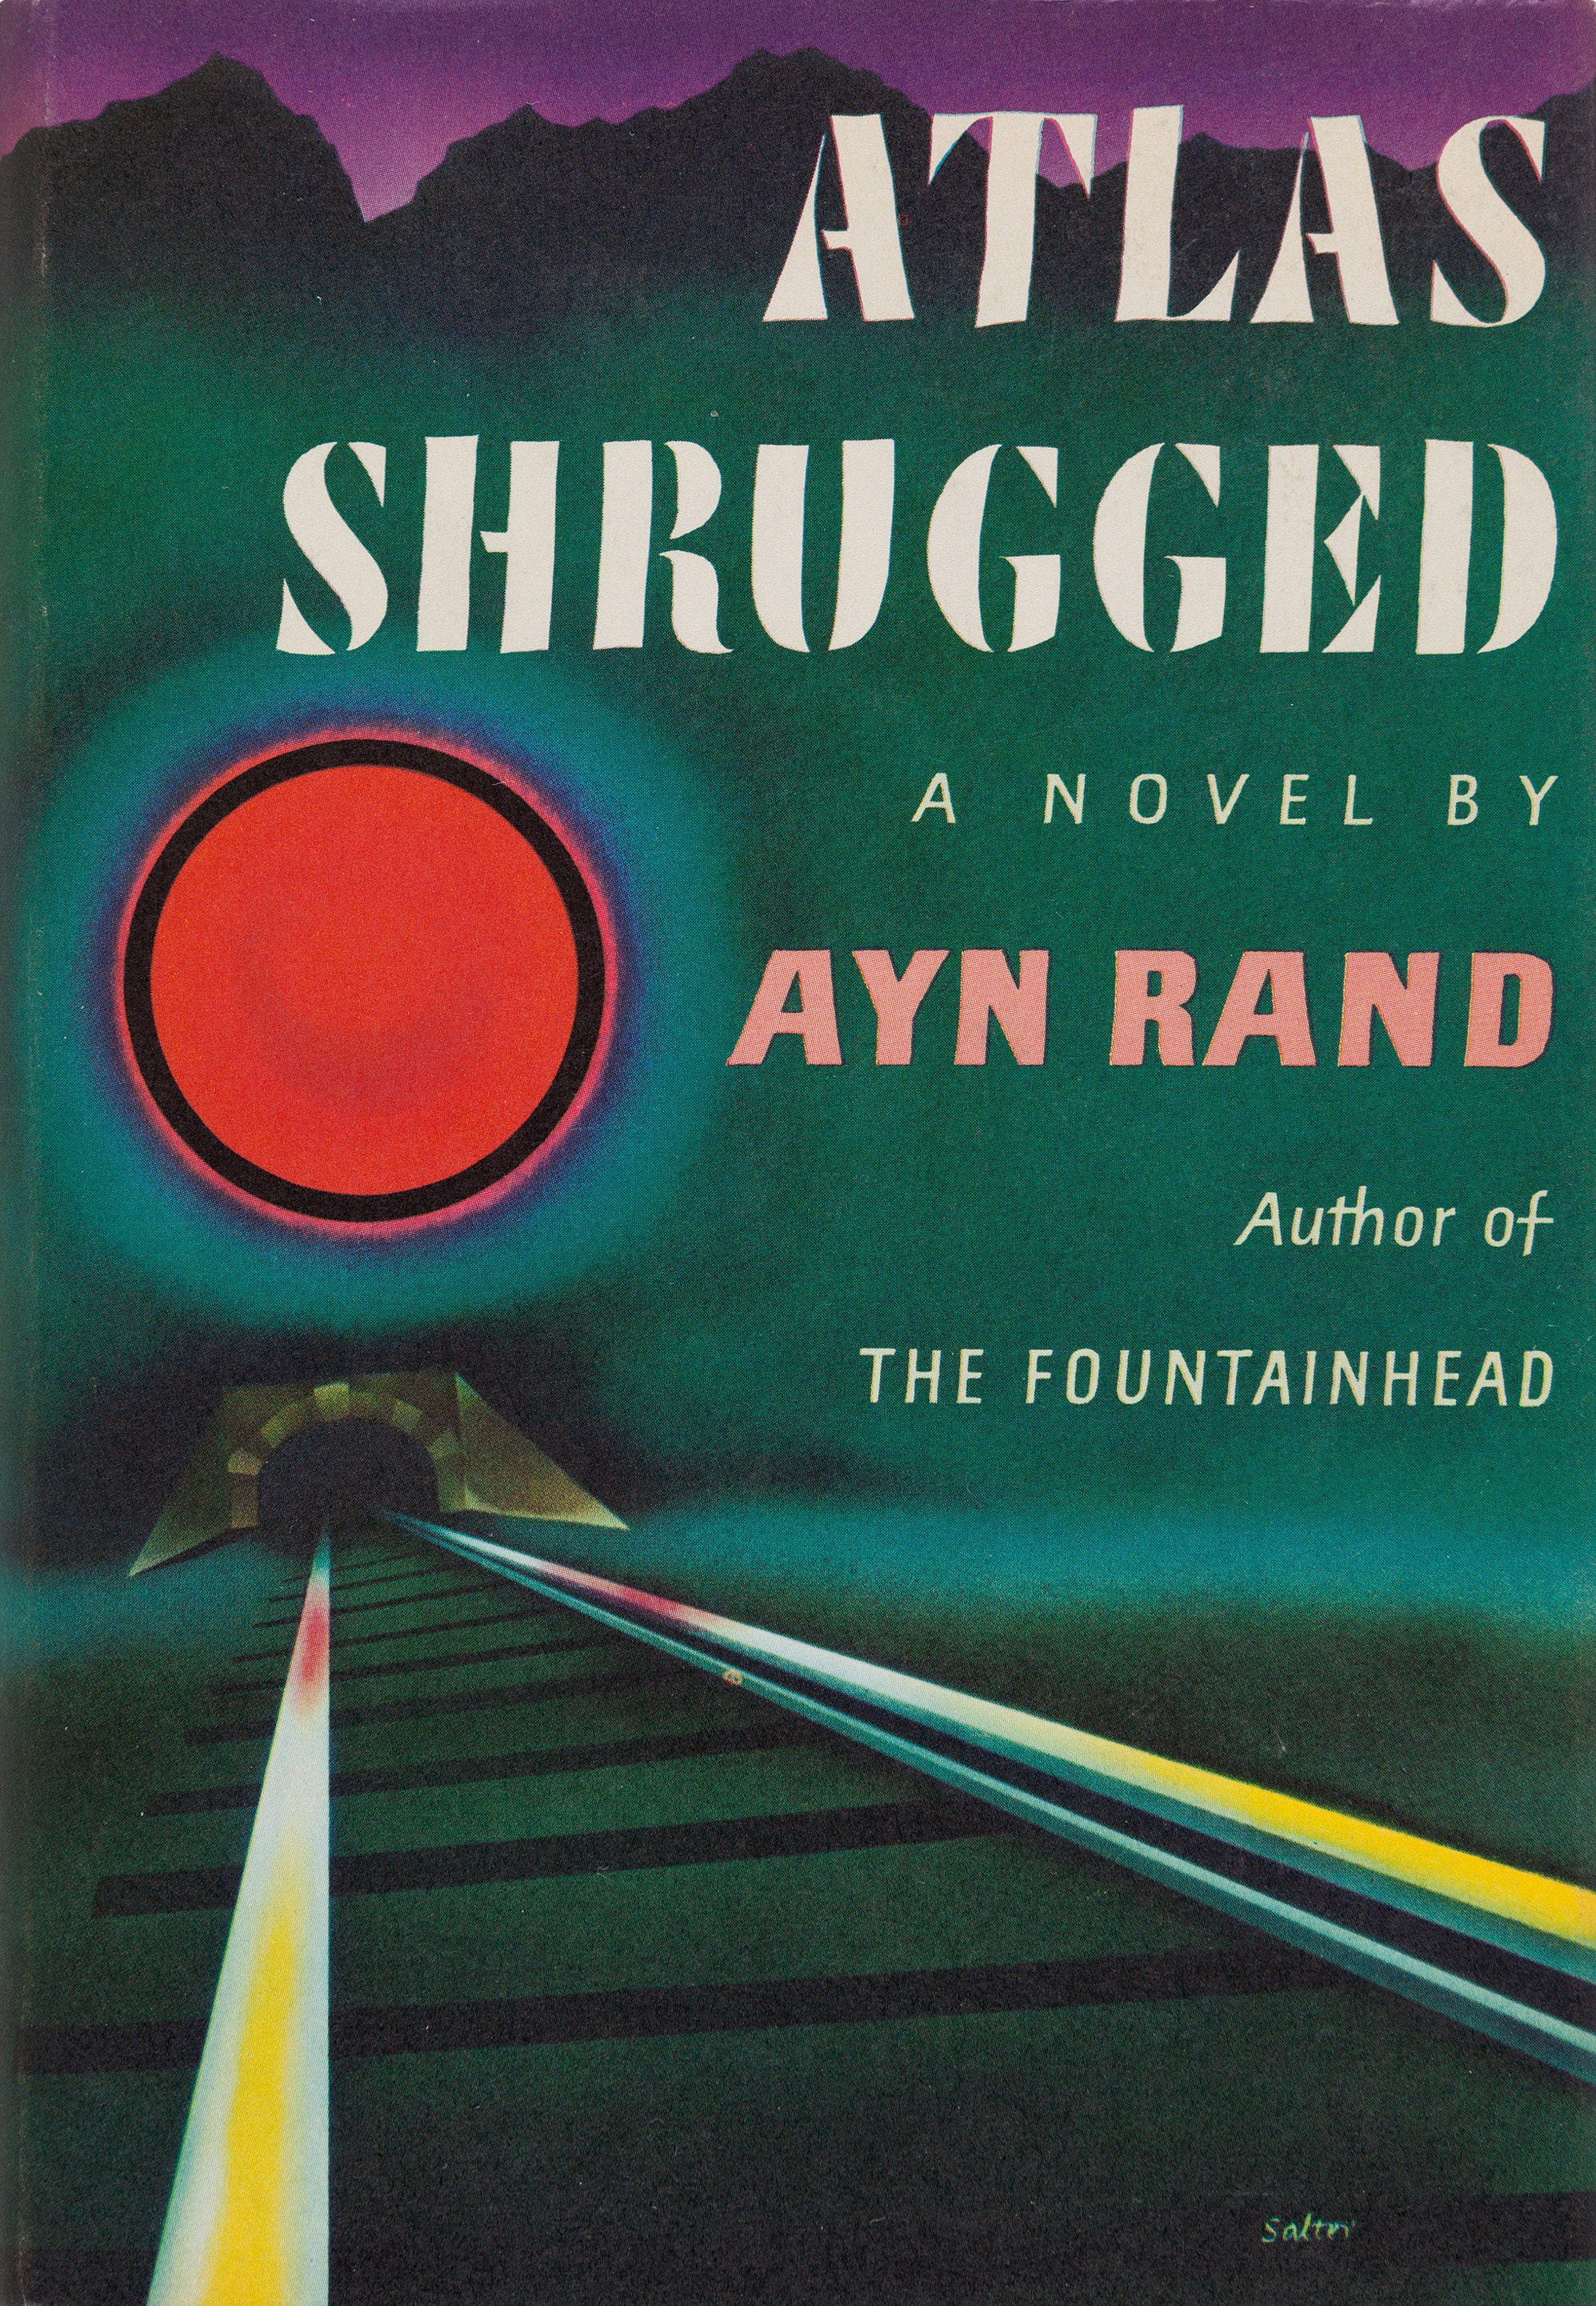 Atlas Shrugged by Ayn Rand (first edition)